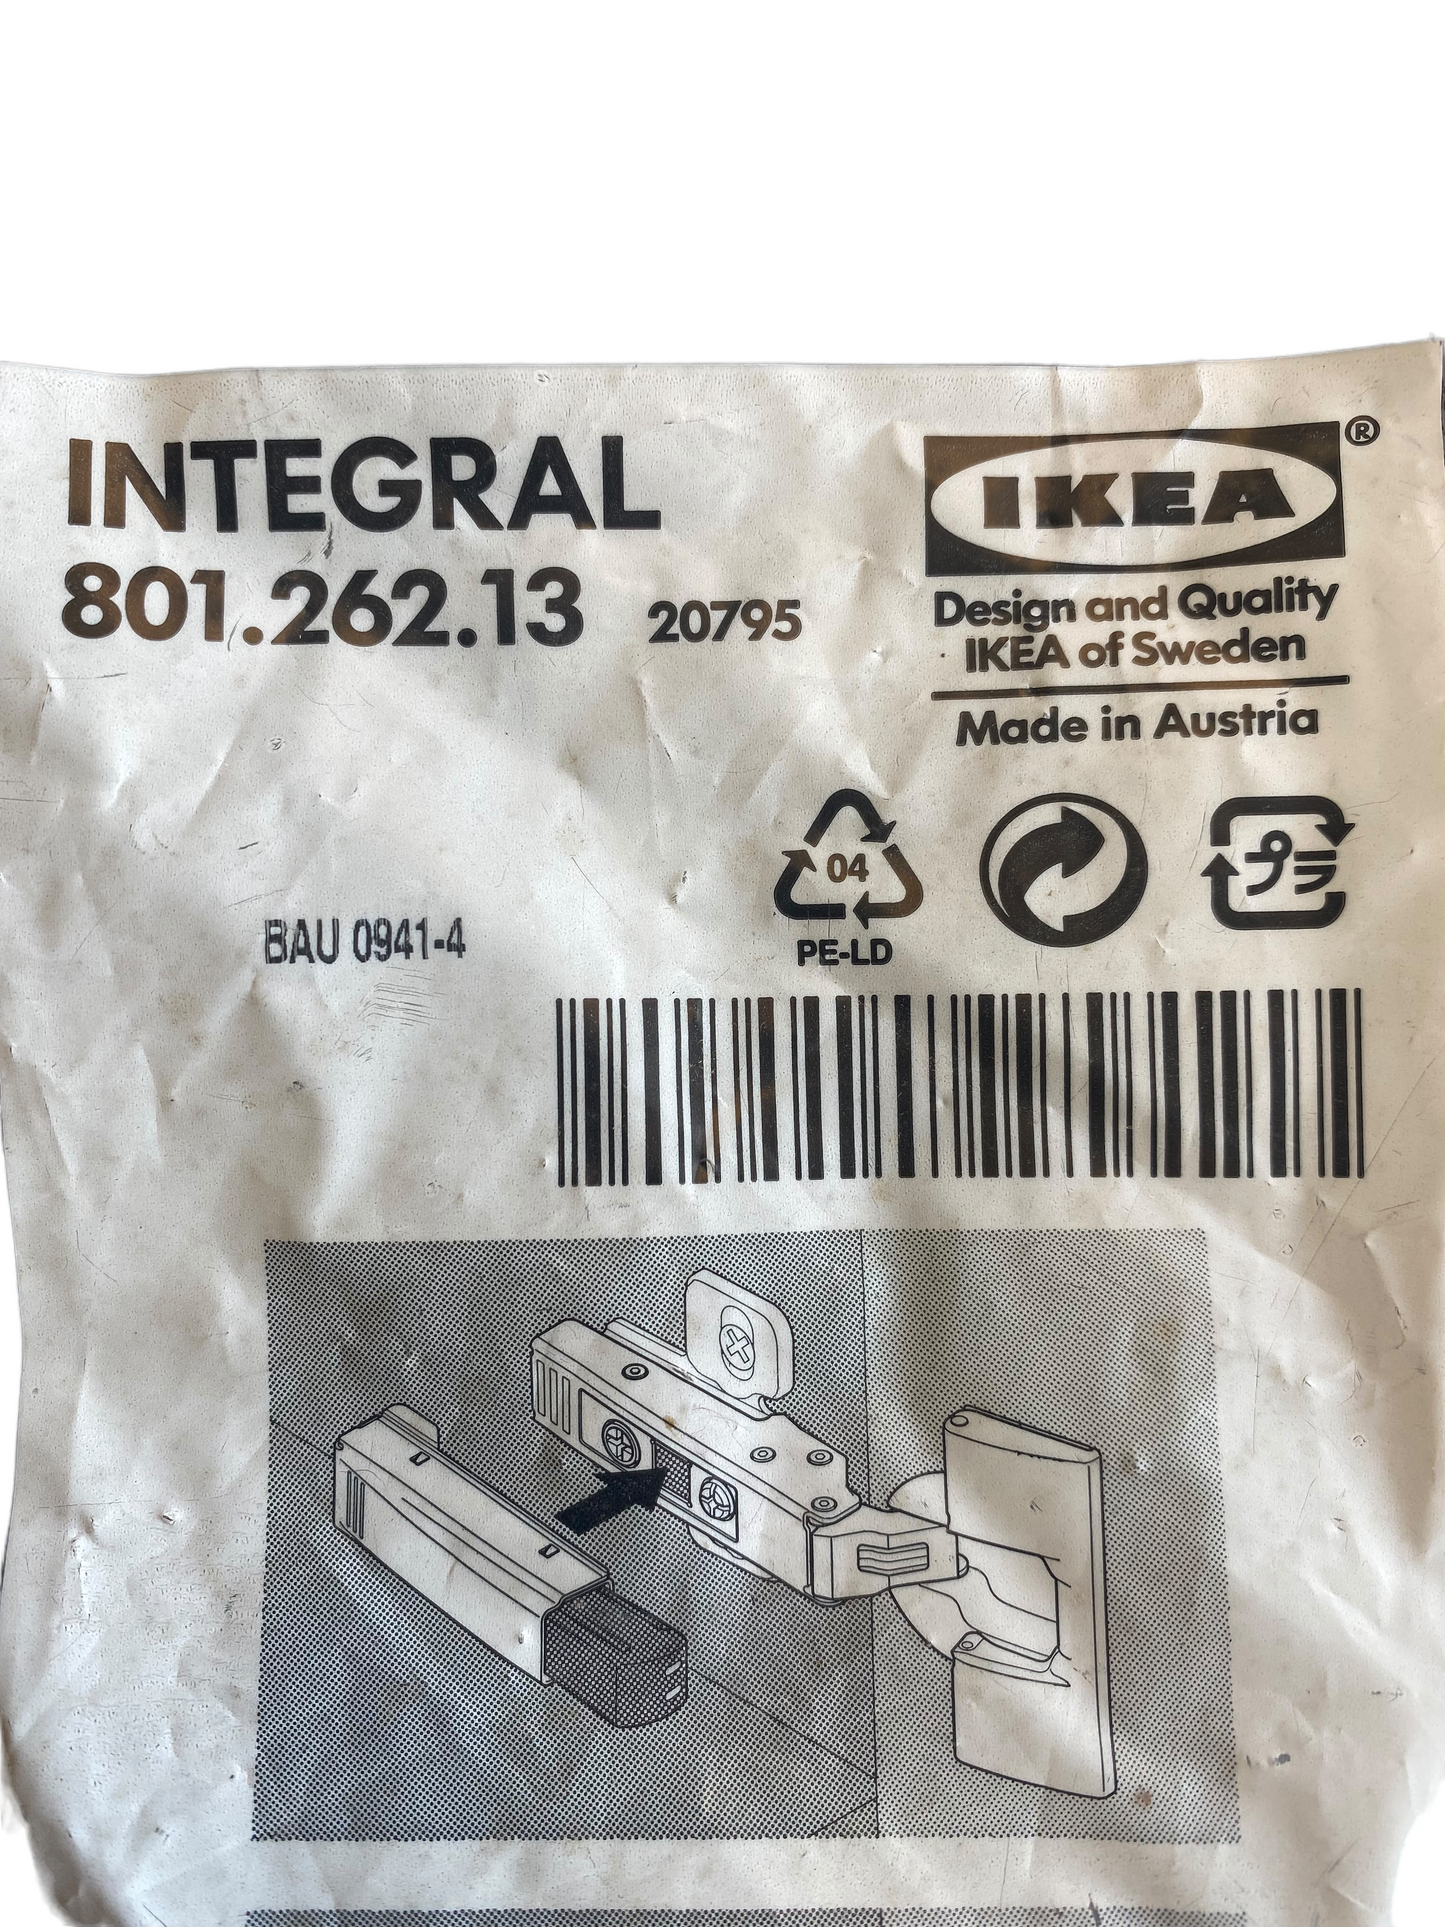 8 IKEA Integral 801.262.13 Cabinet Door Dampers Soft Close 20795 2 x 2-Packs